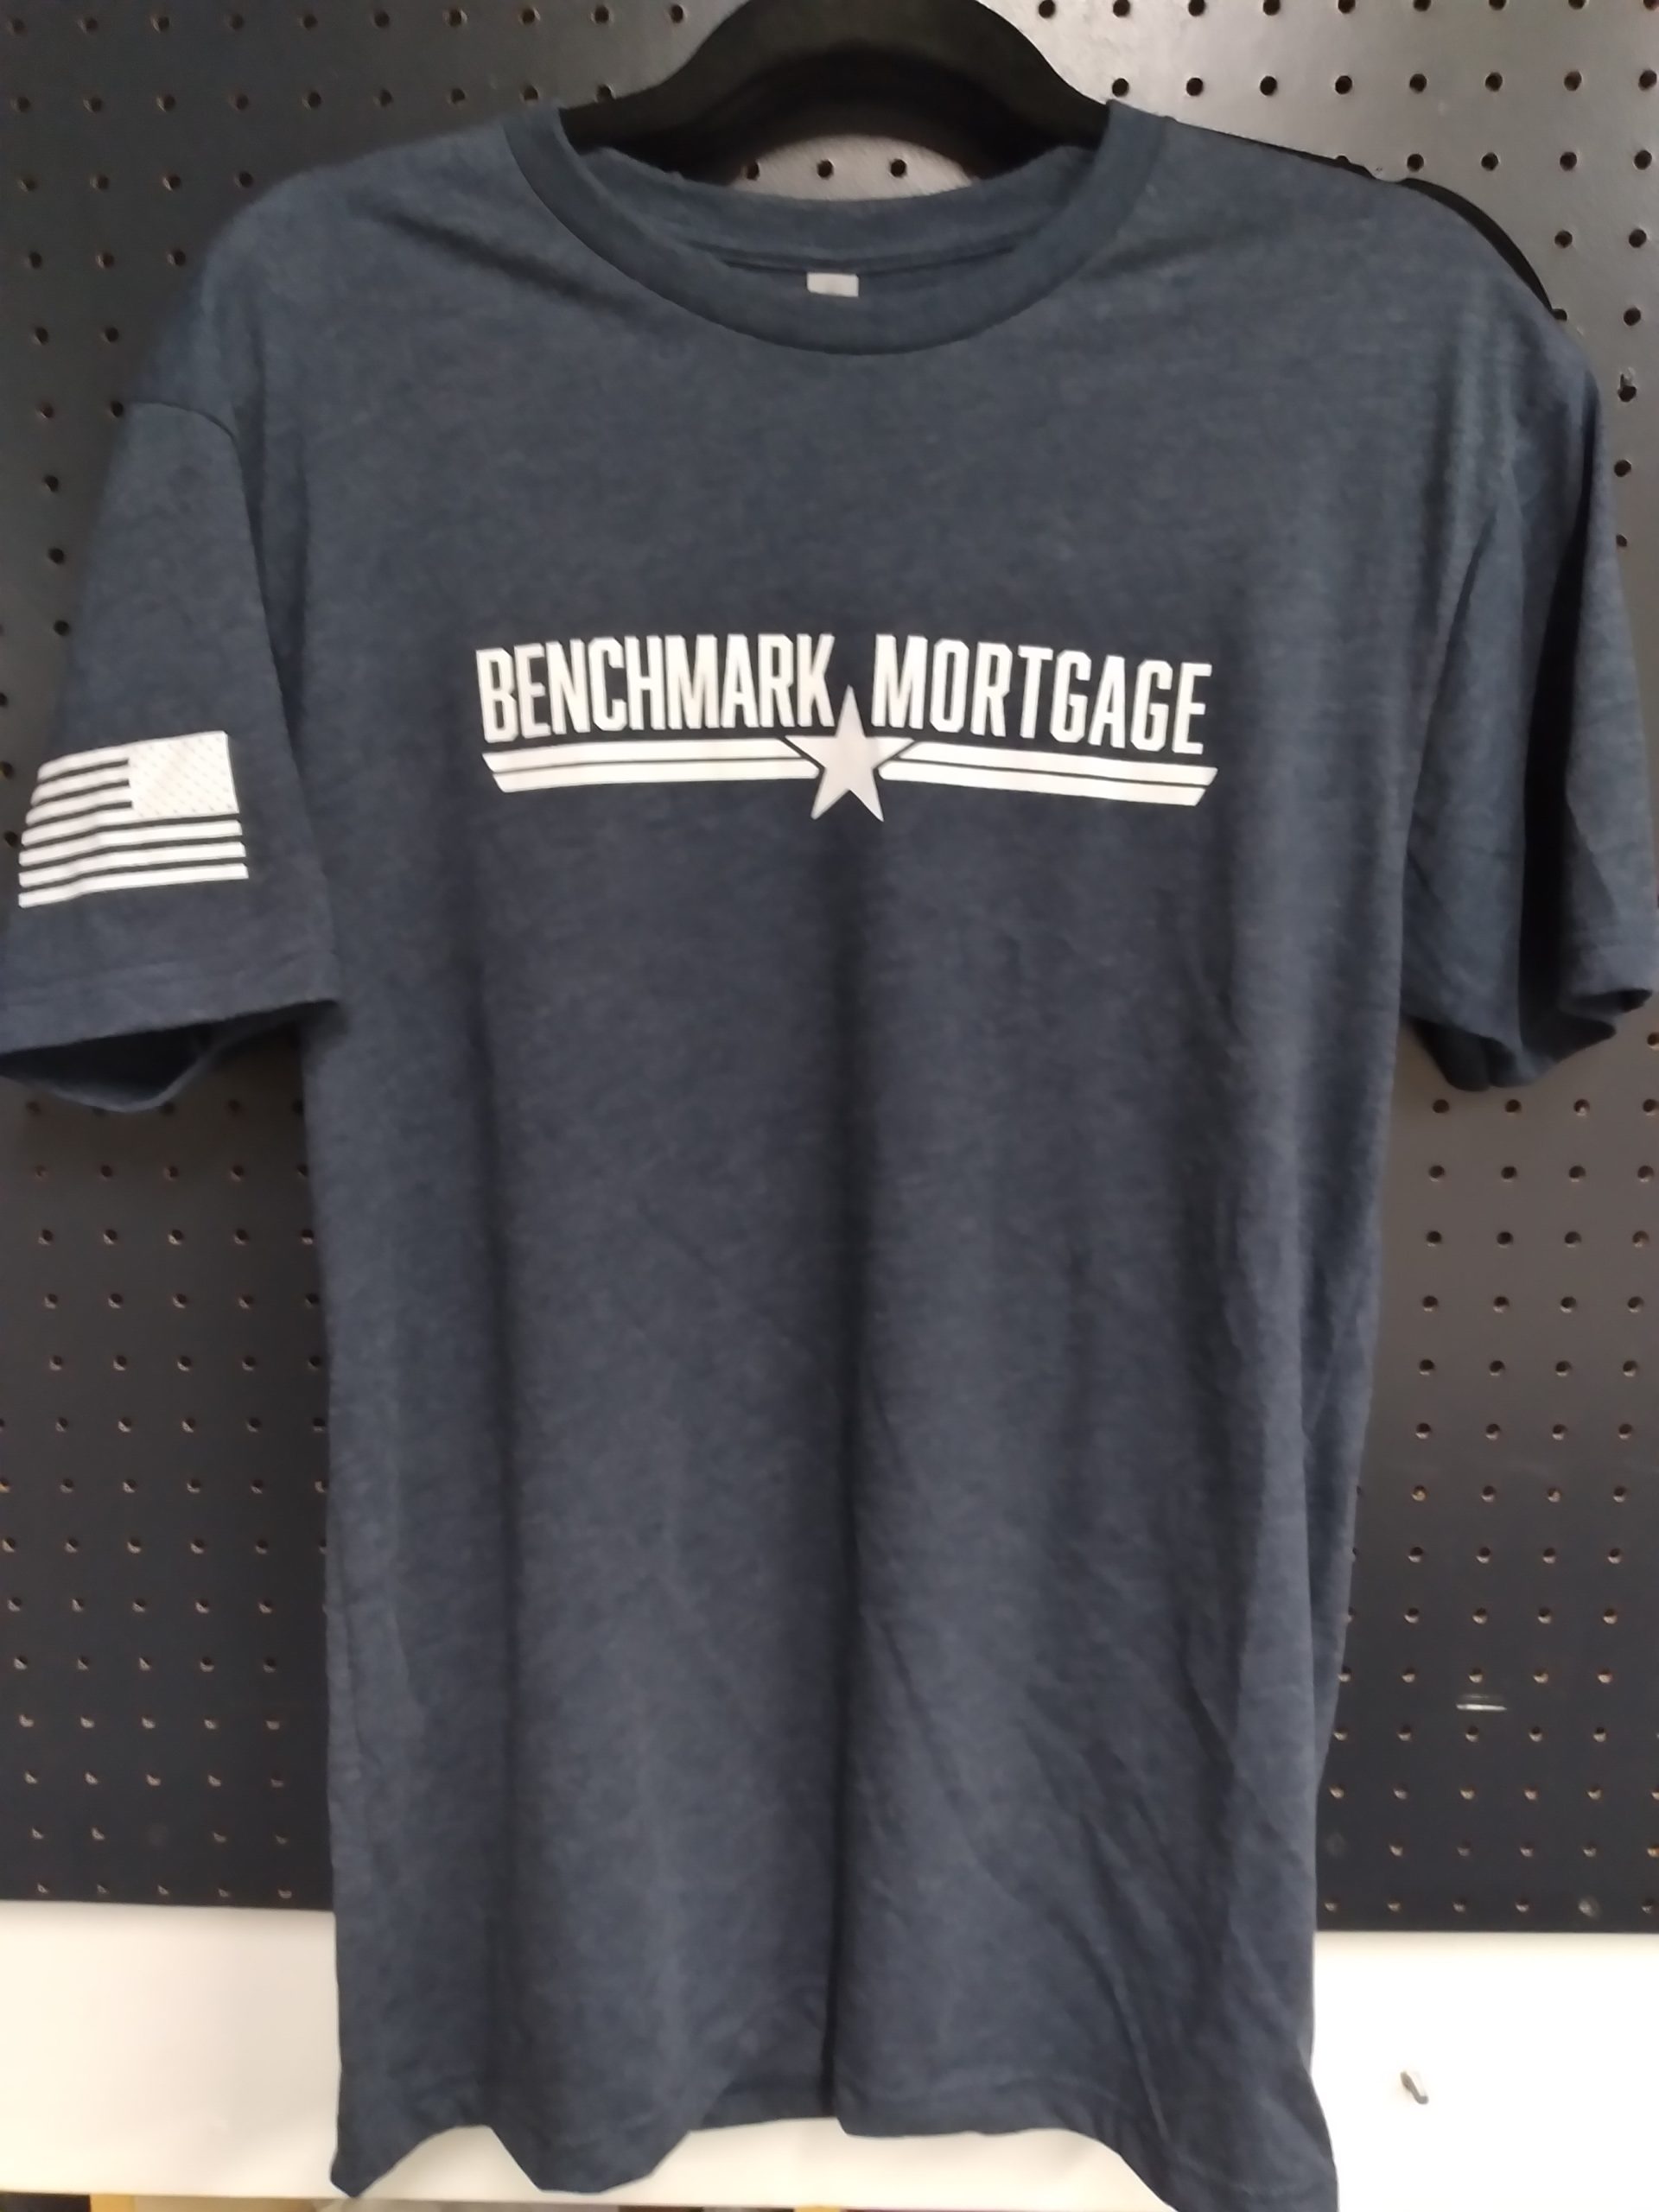 Benchmark mortgage shirts